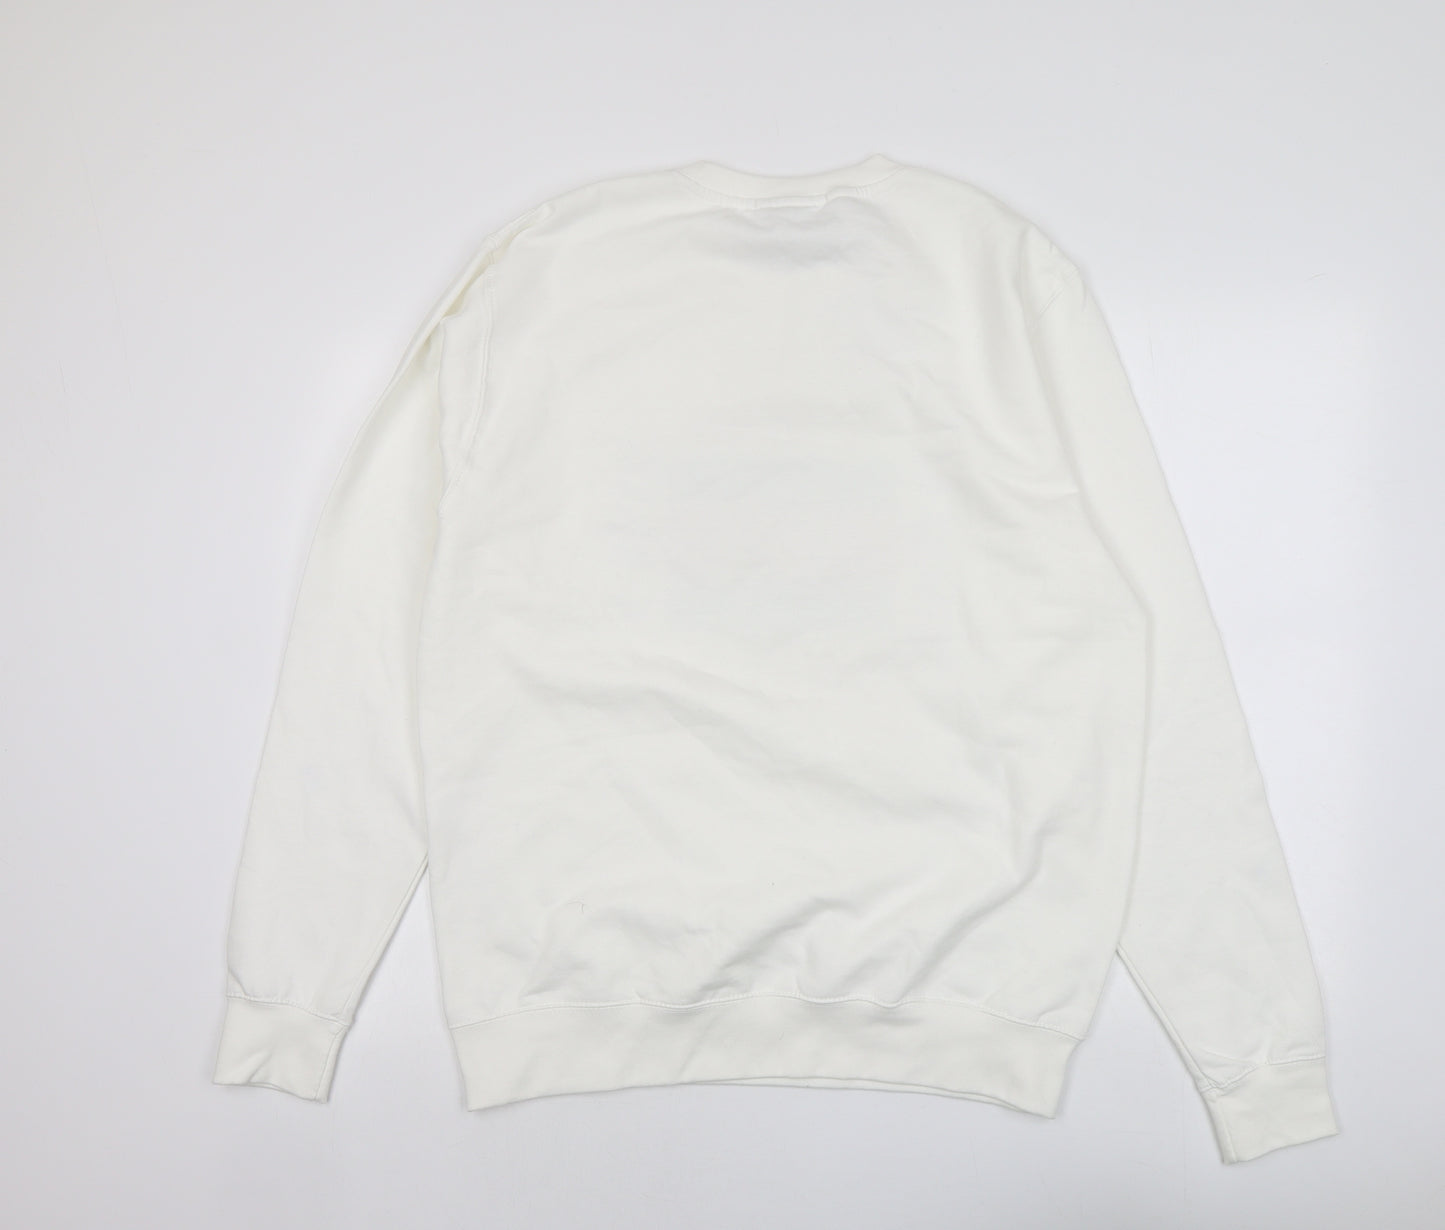 London.Co Mens White Cotton Pullover Sweatshirt Size XL - Christmas